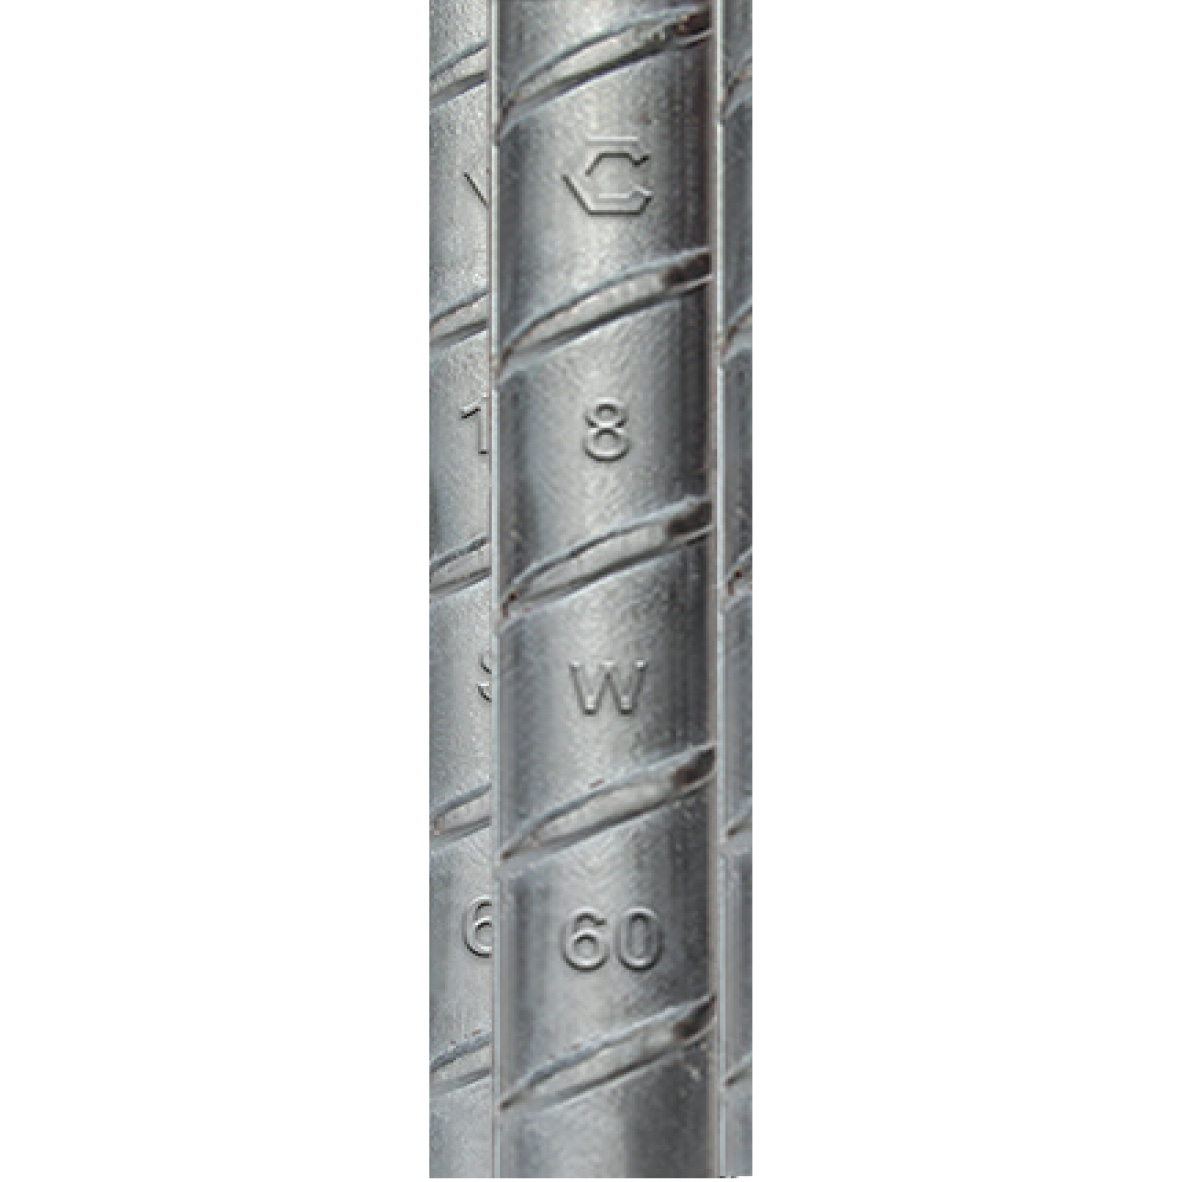 Barras de acero corrugado microaleadas bajo norma ASTM A-706